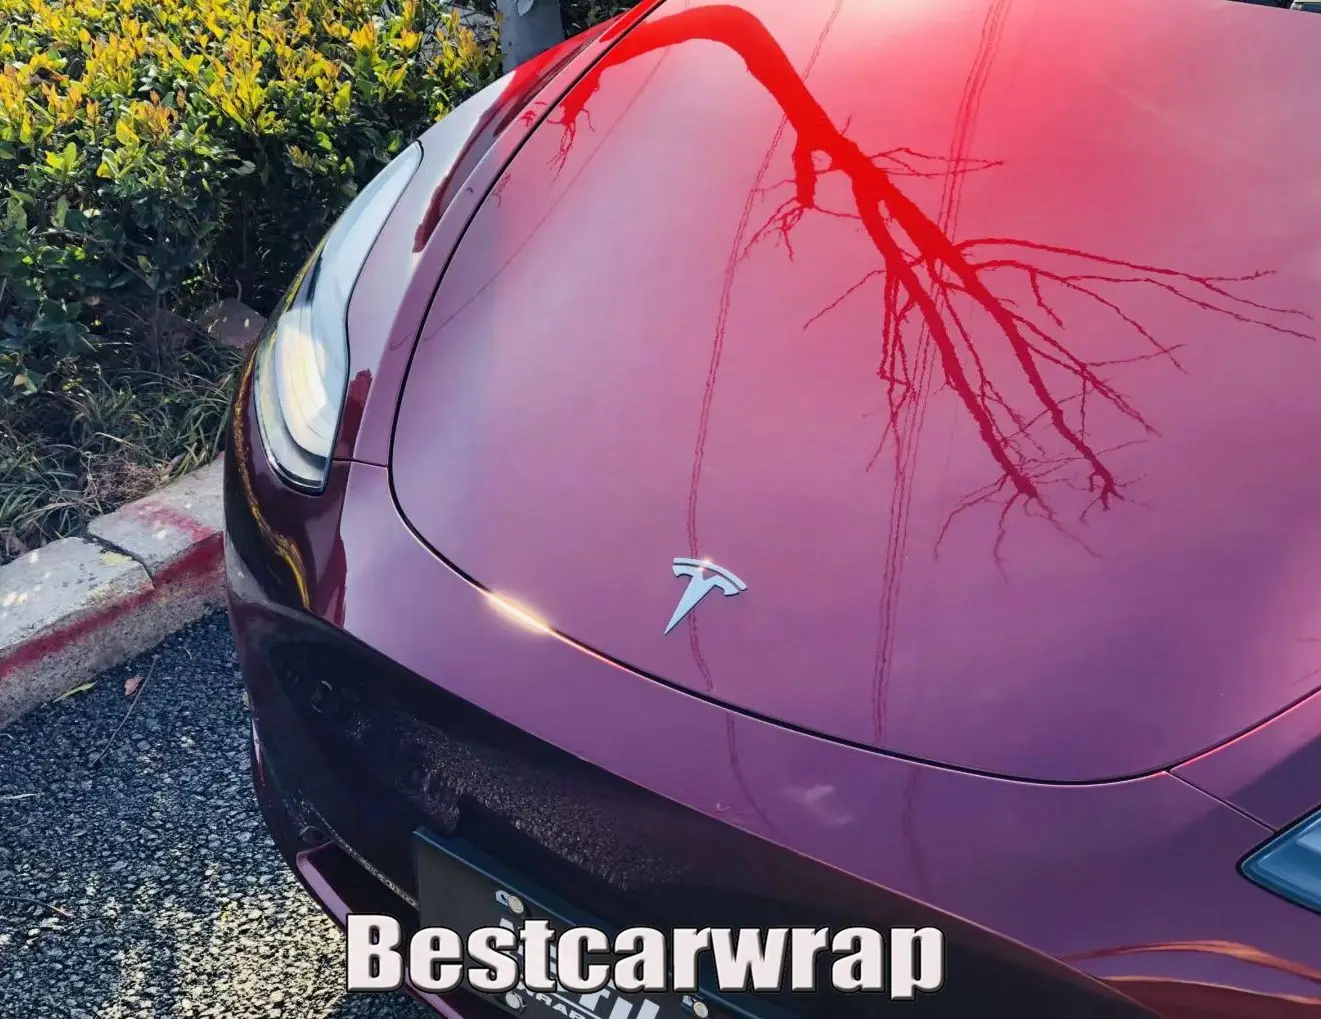 Gloss Metallic Liquid Dragon Red Car Vinyl Wrap PET Liner – Car